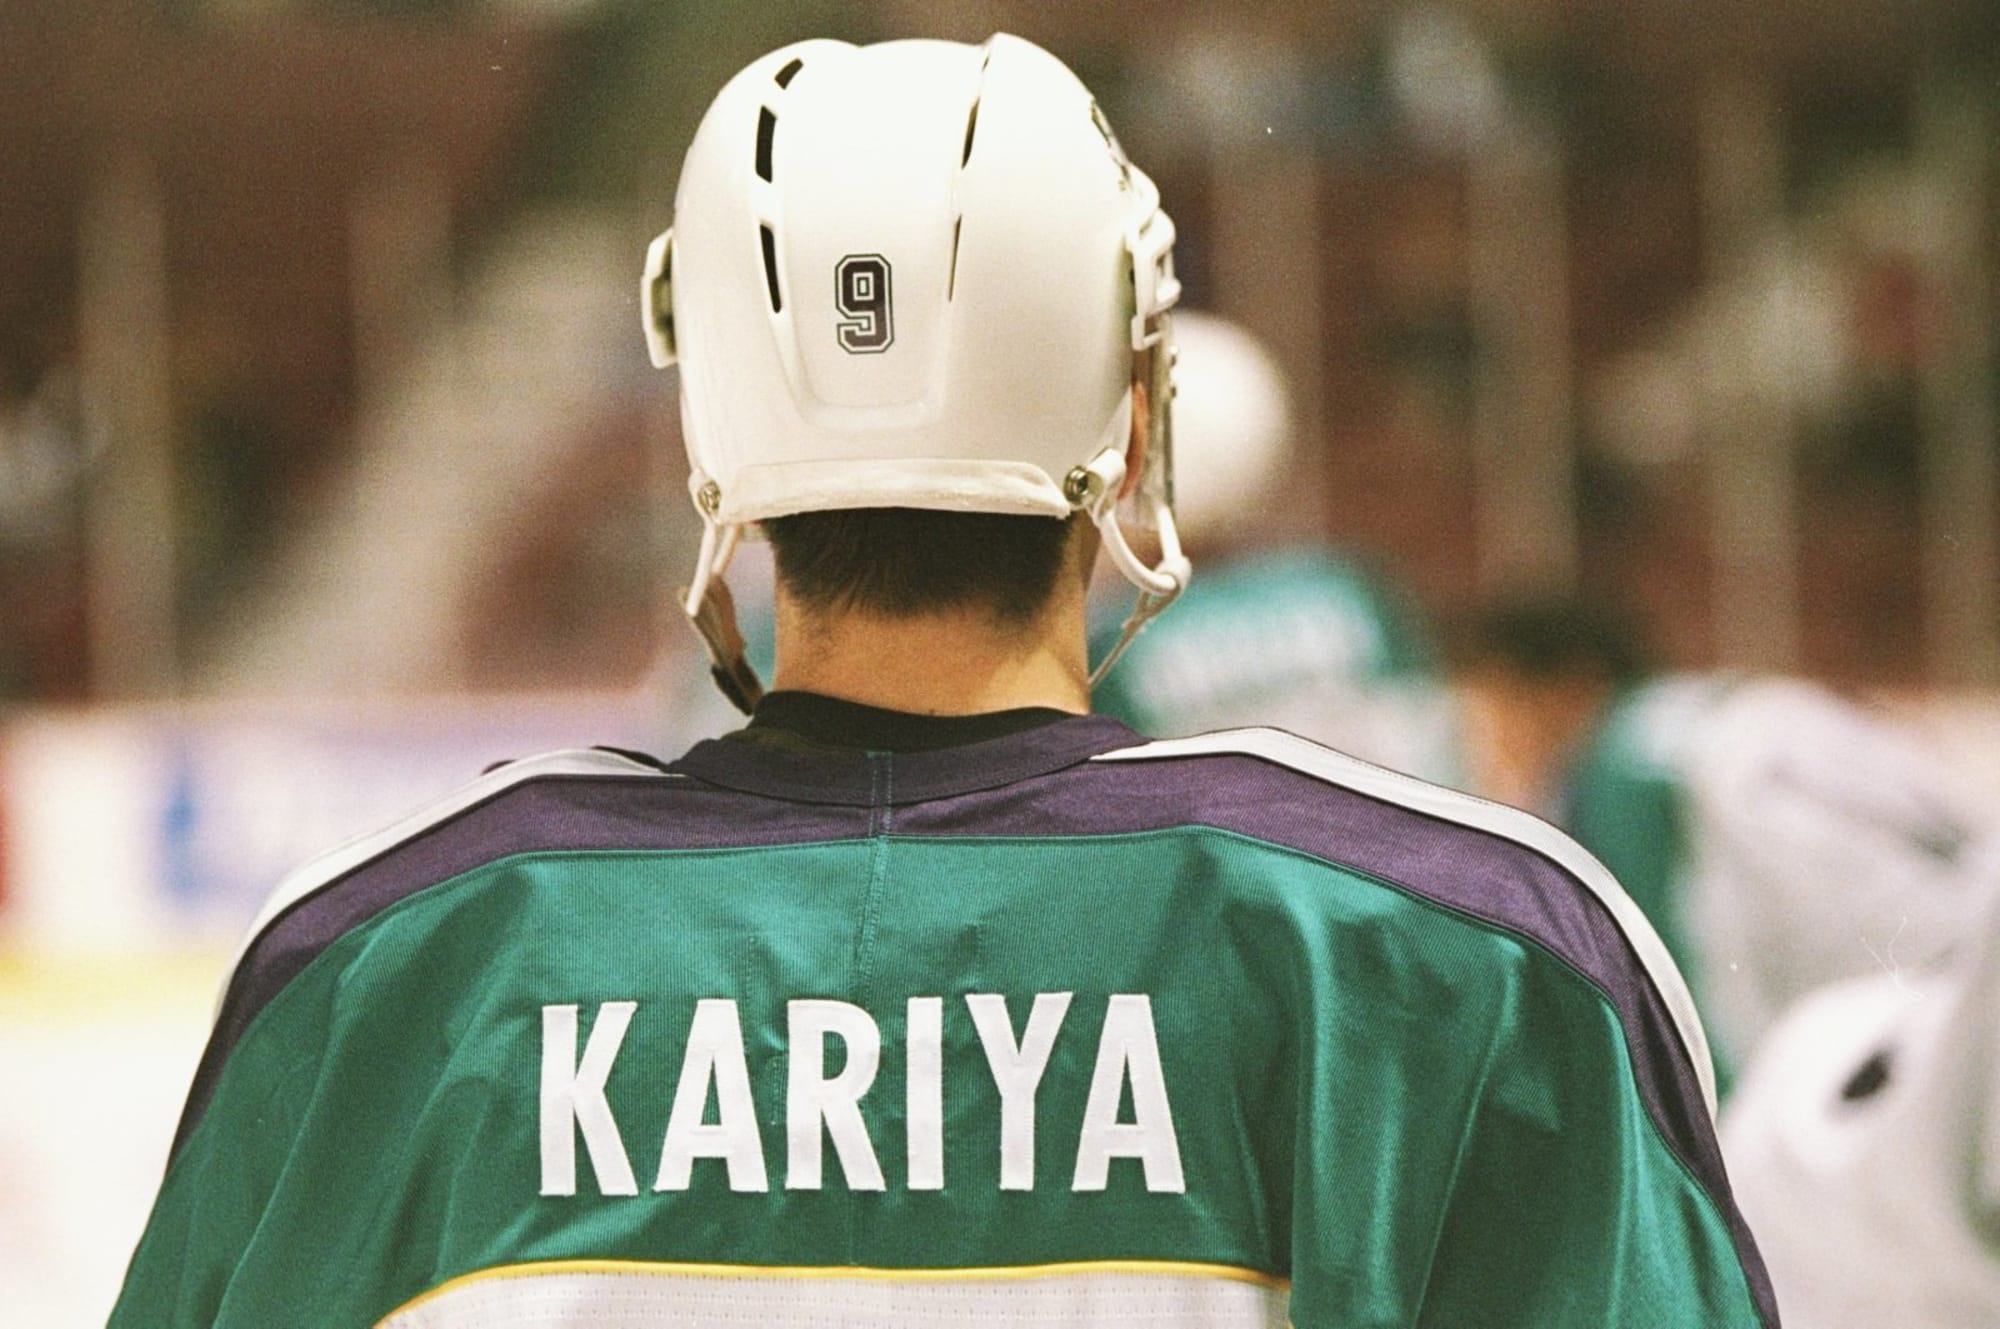 Paul Kariya Jersey  2003 Anaheim Mighty Ducks Throwback Hockey Jersey